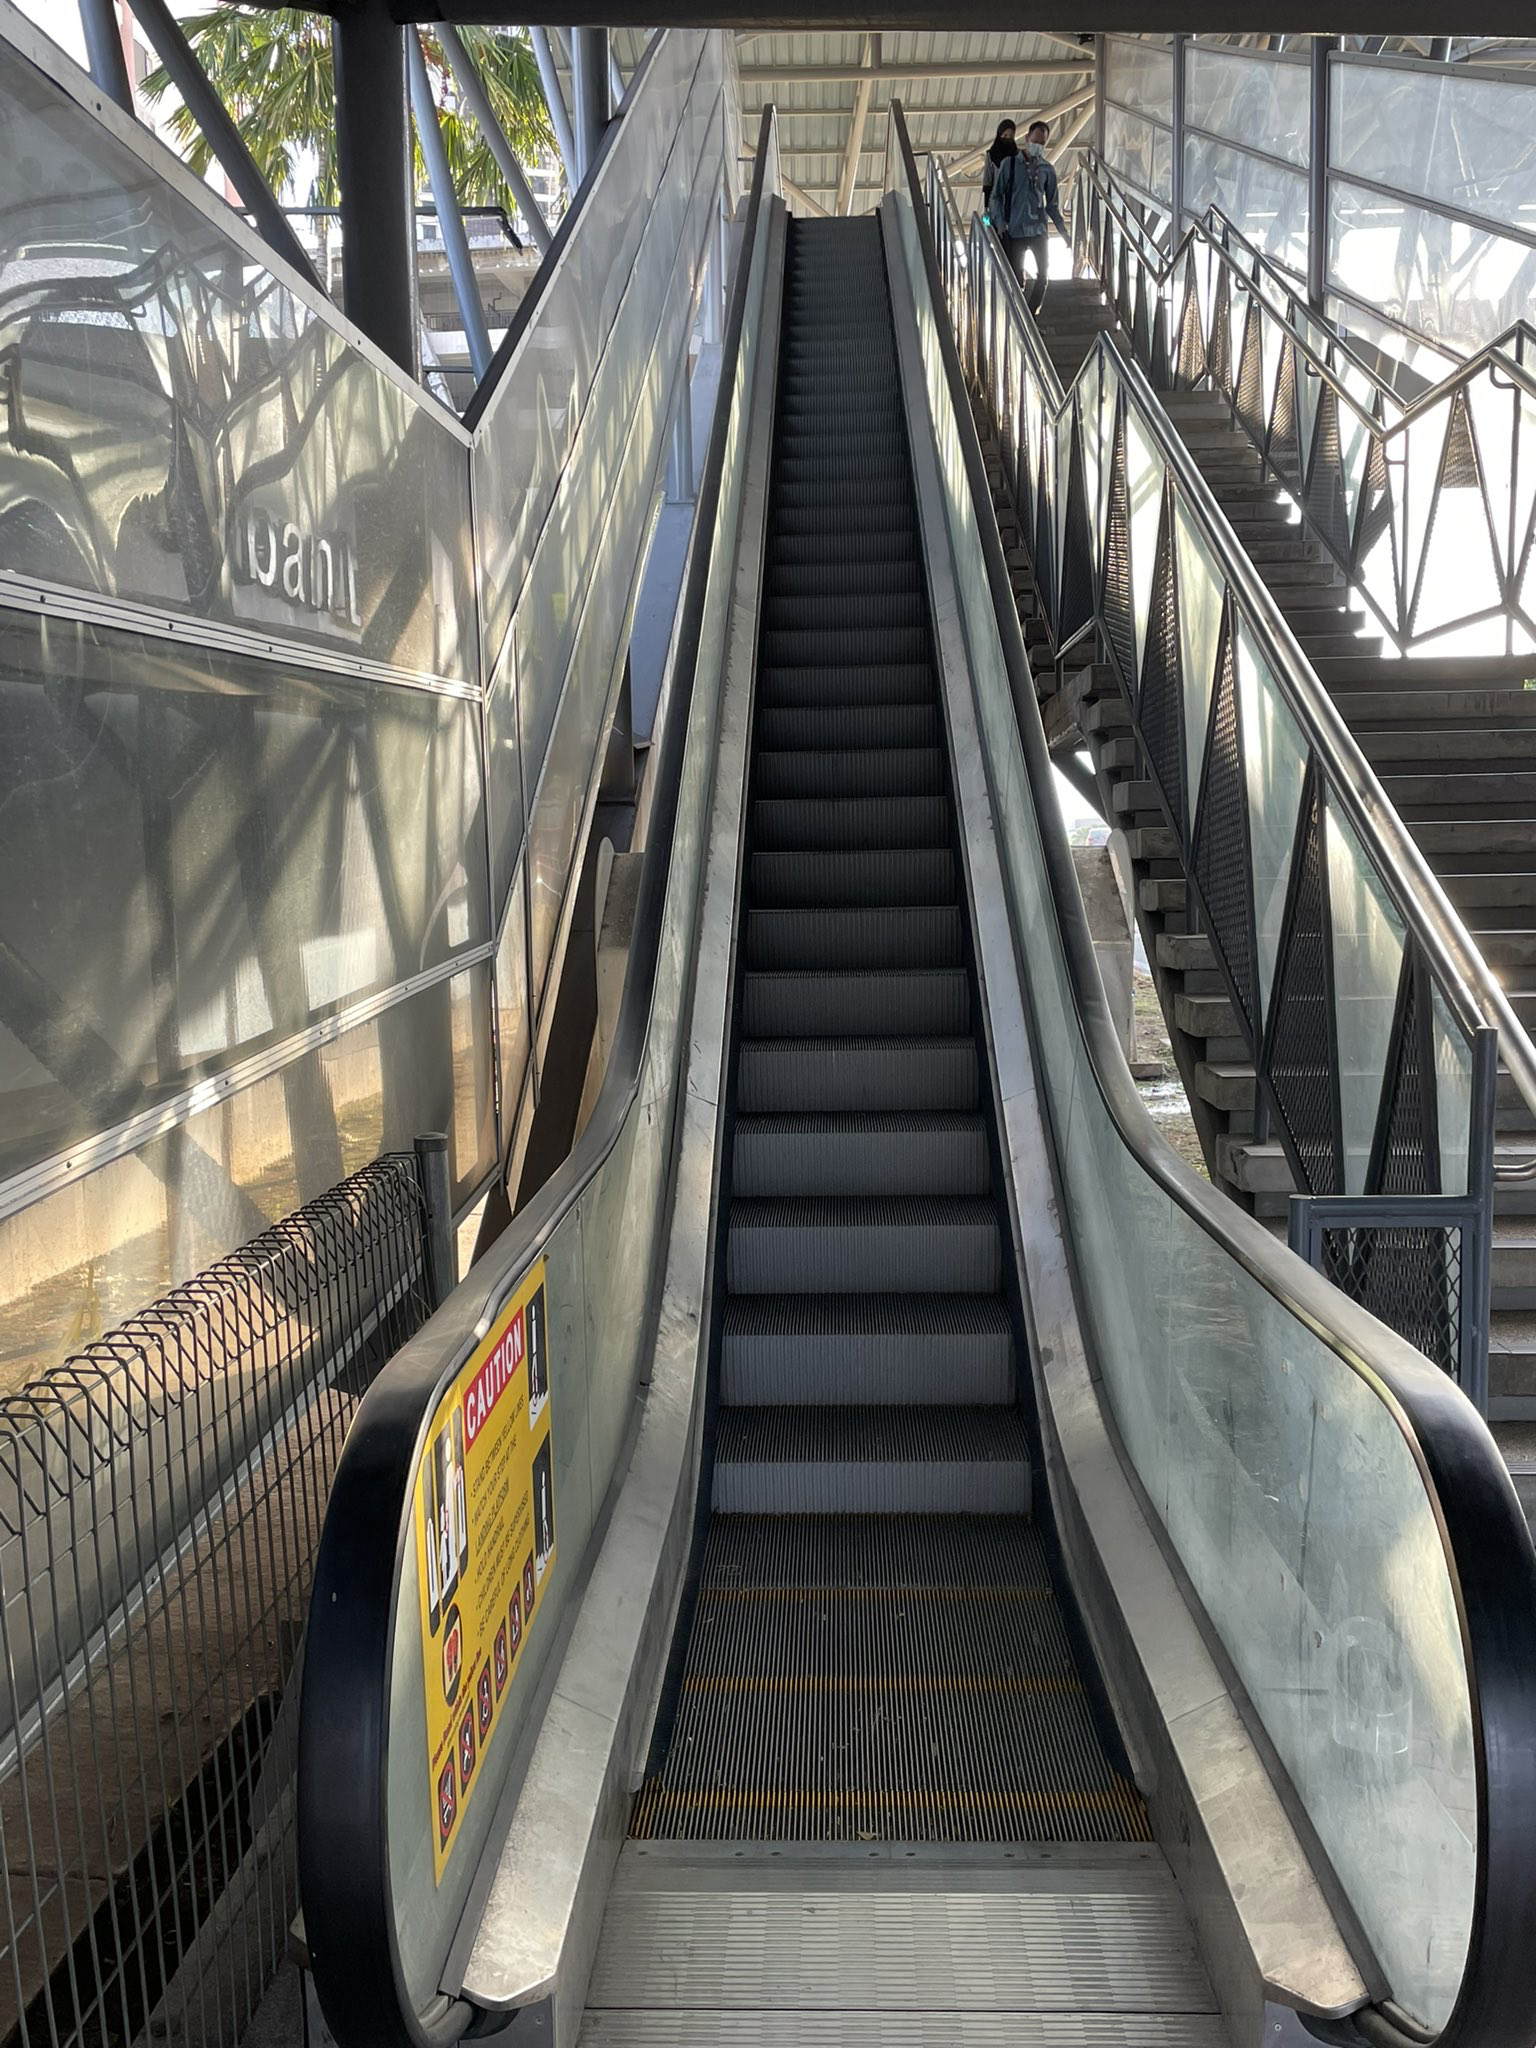 Escalator at sri rampai lrt station(1)